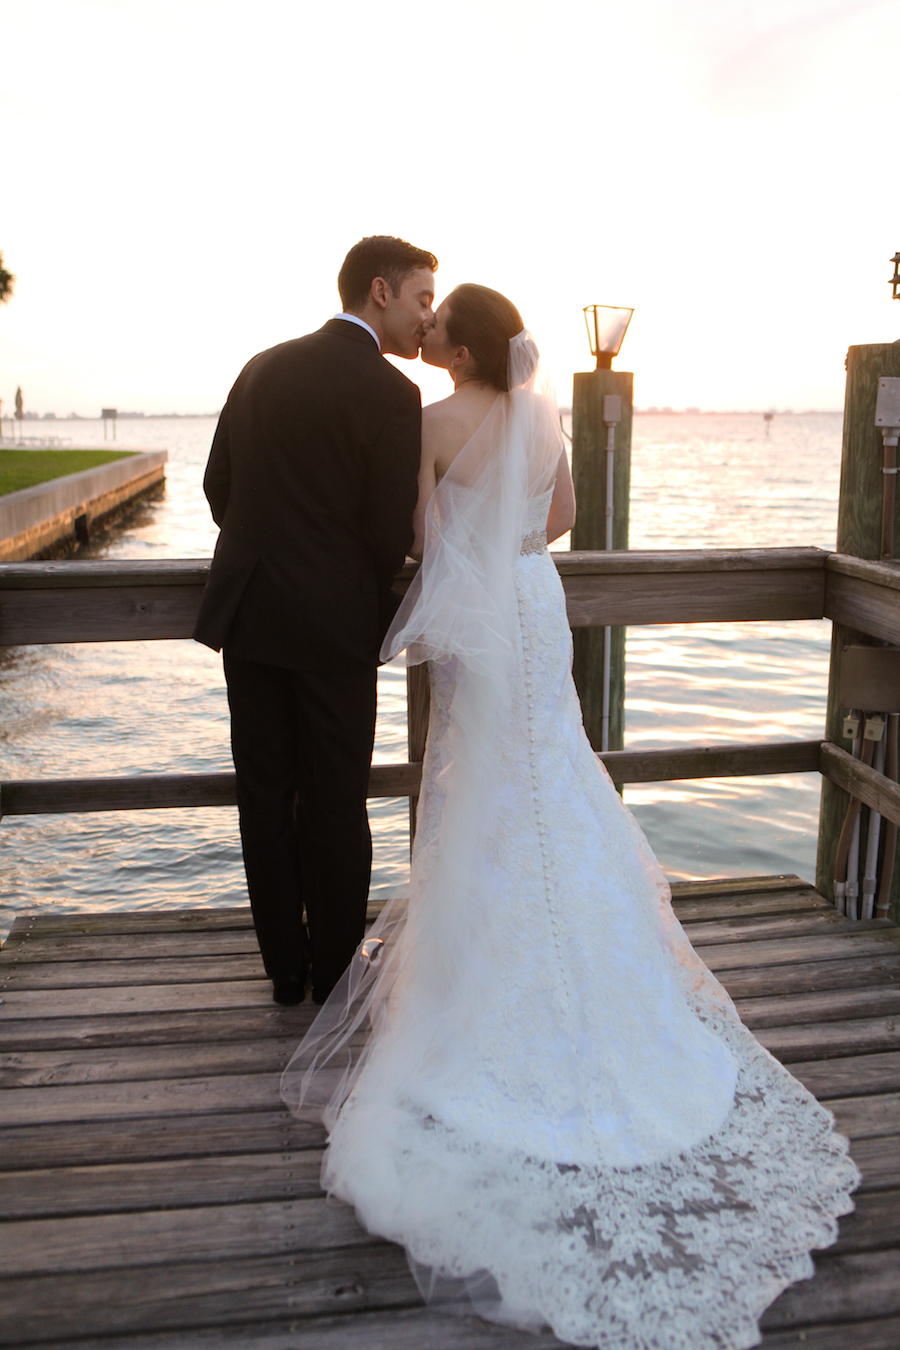 Sunset, Waterfont Sarasota Bride and Groom Wedding Portrait on Dock